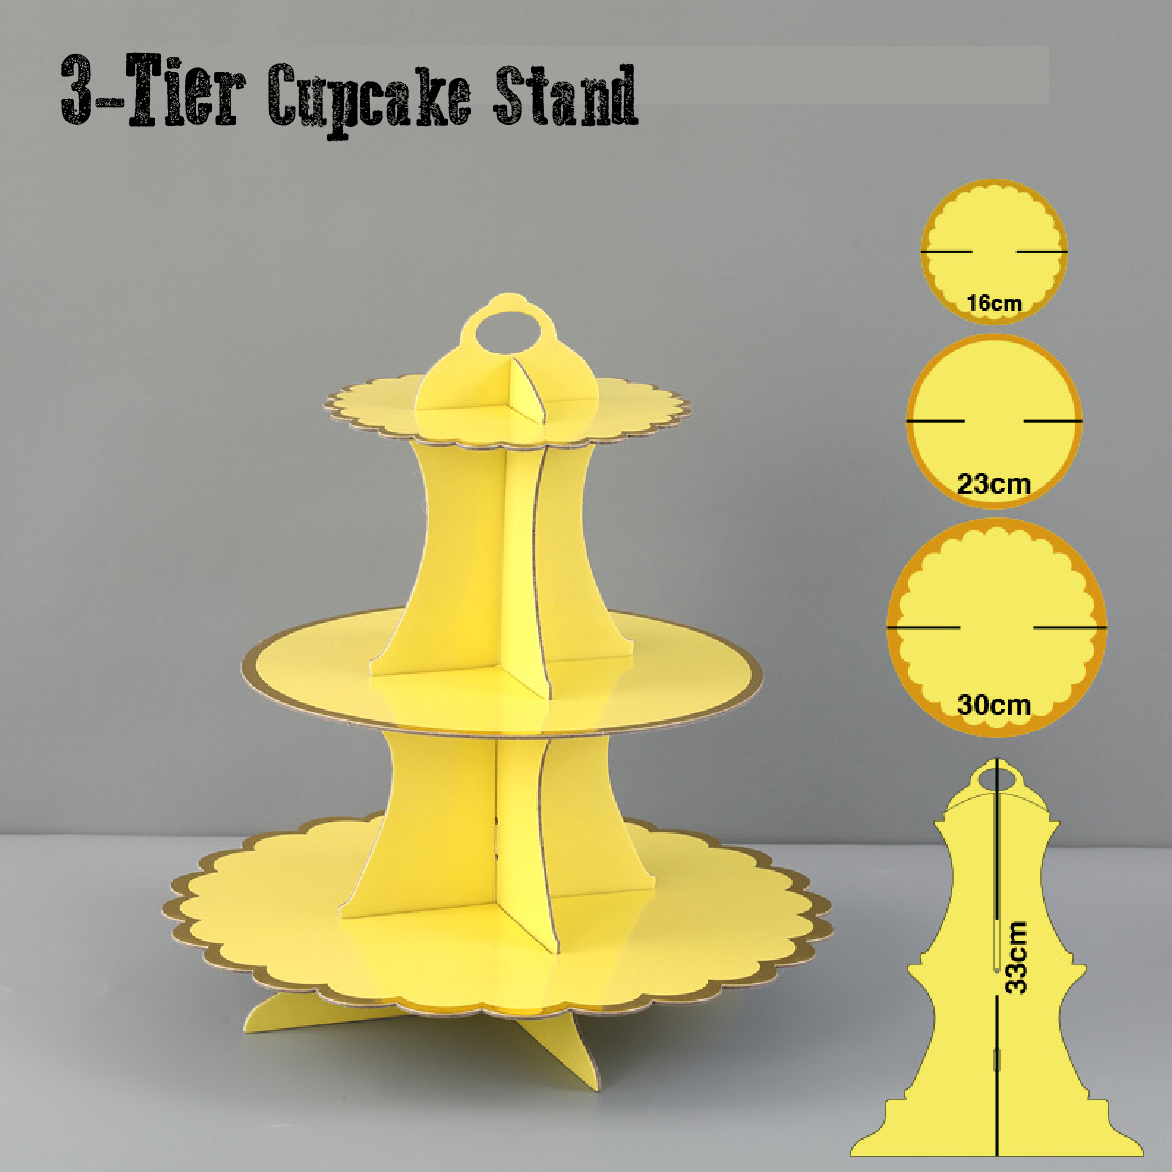 Cupcake Stand/Tower - 3 Tier Cupcake Display - Yellow